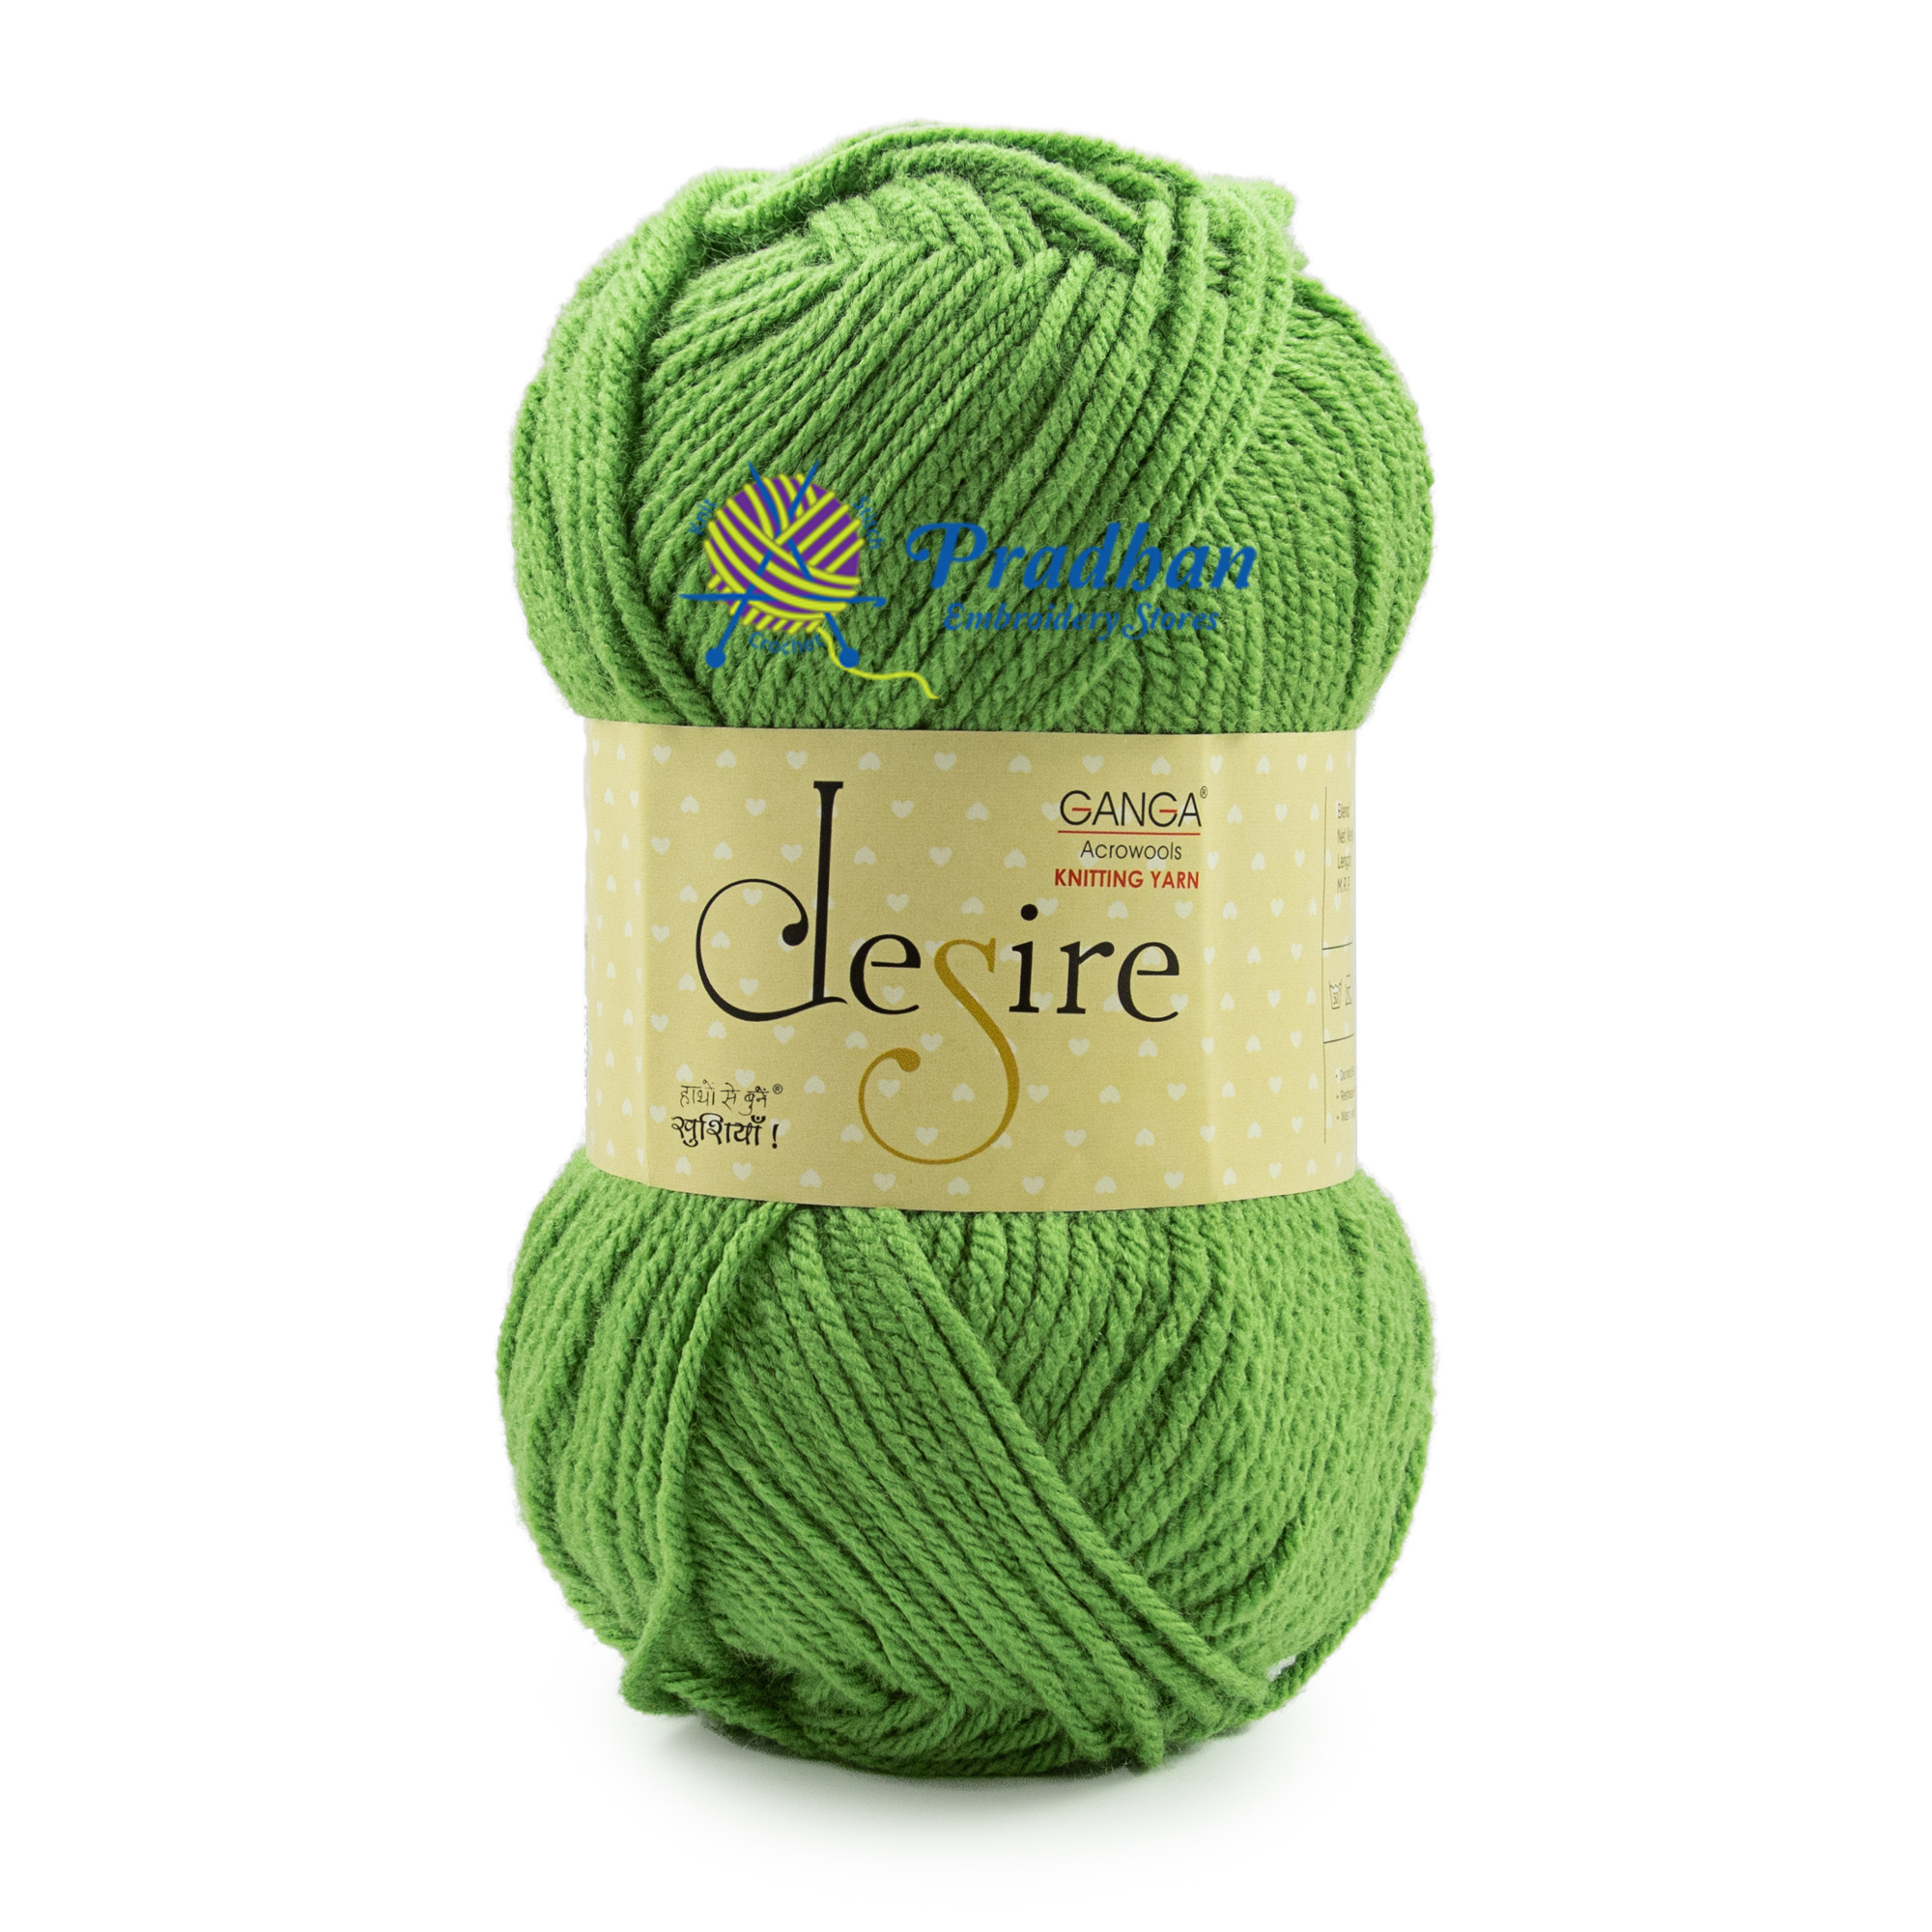 RR Dark Green 4 ply Wool Yarn for Knitting and Crochet Craft-200